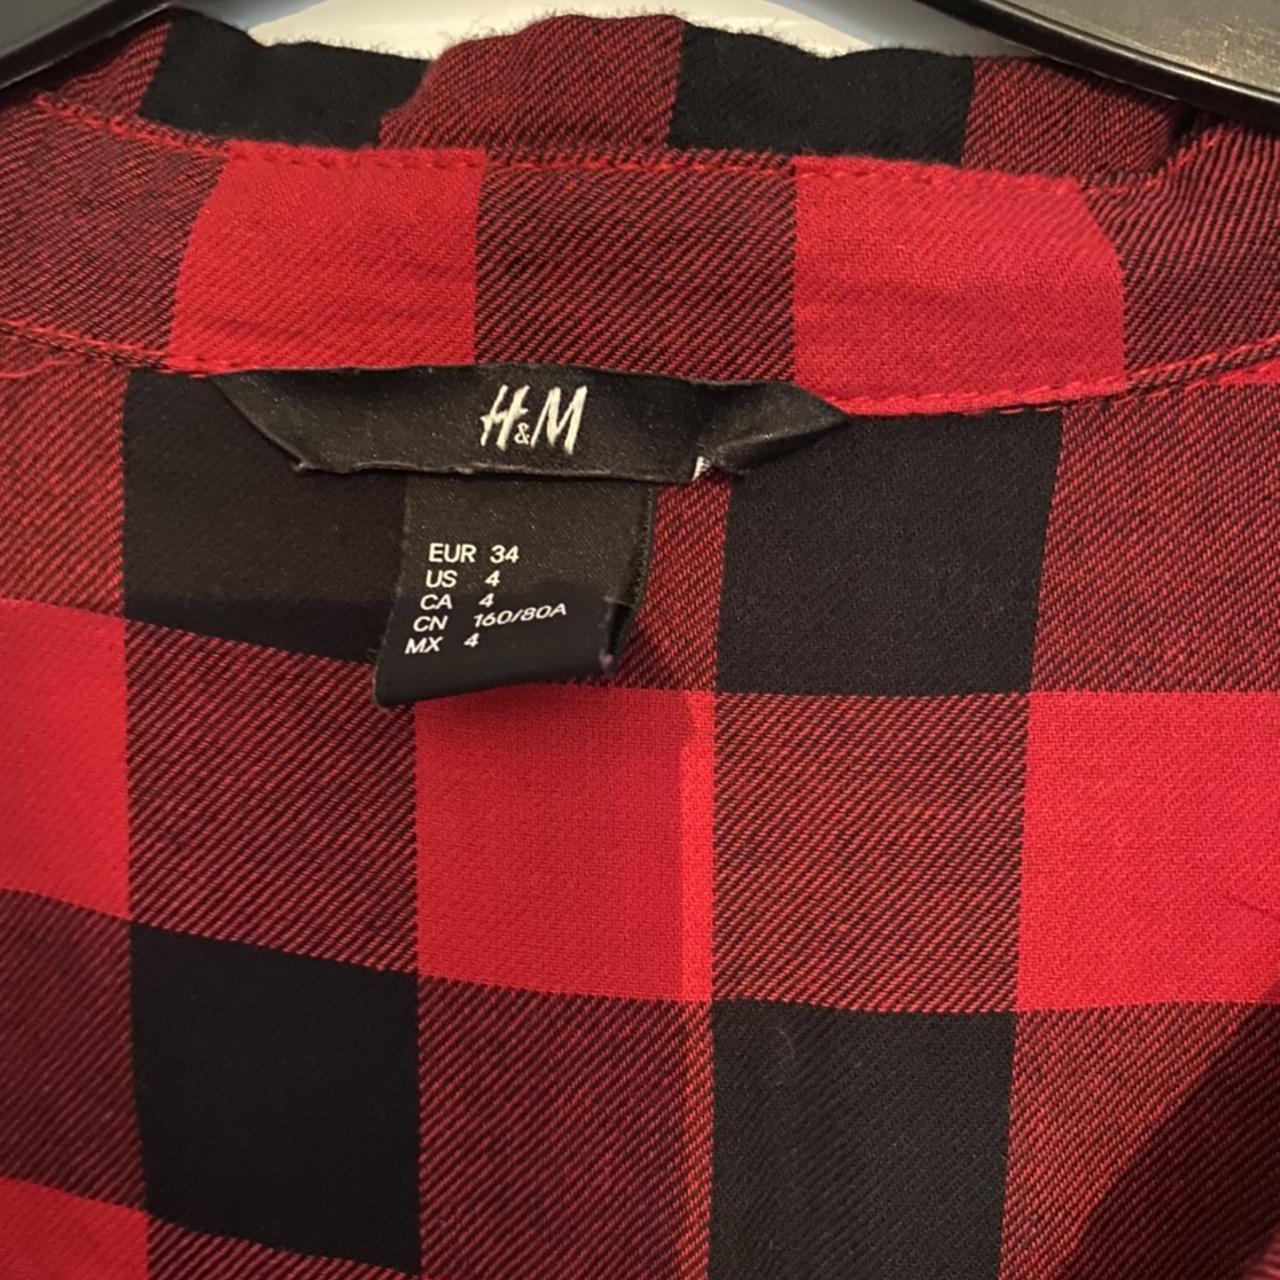 Red & black checked H&M shirt, size European 34.... - Depop